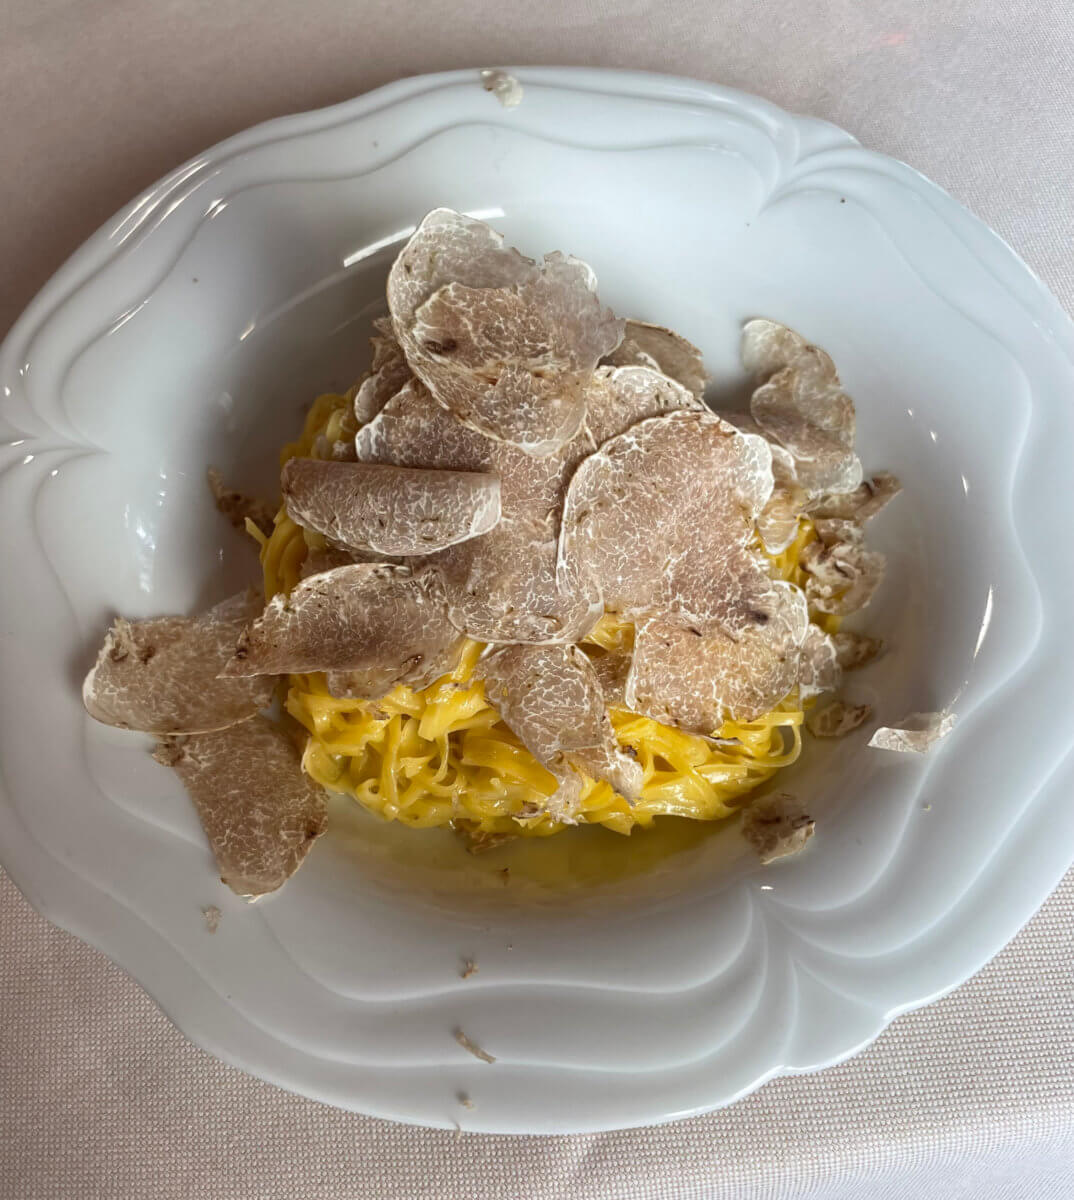 Tajarin pasta with truffles